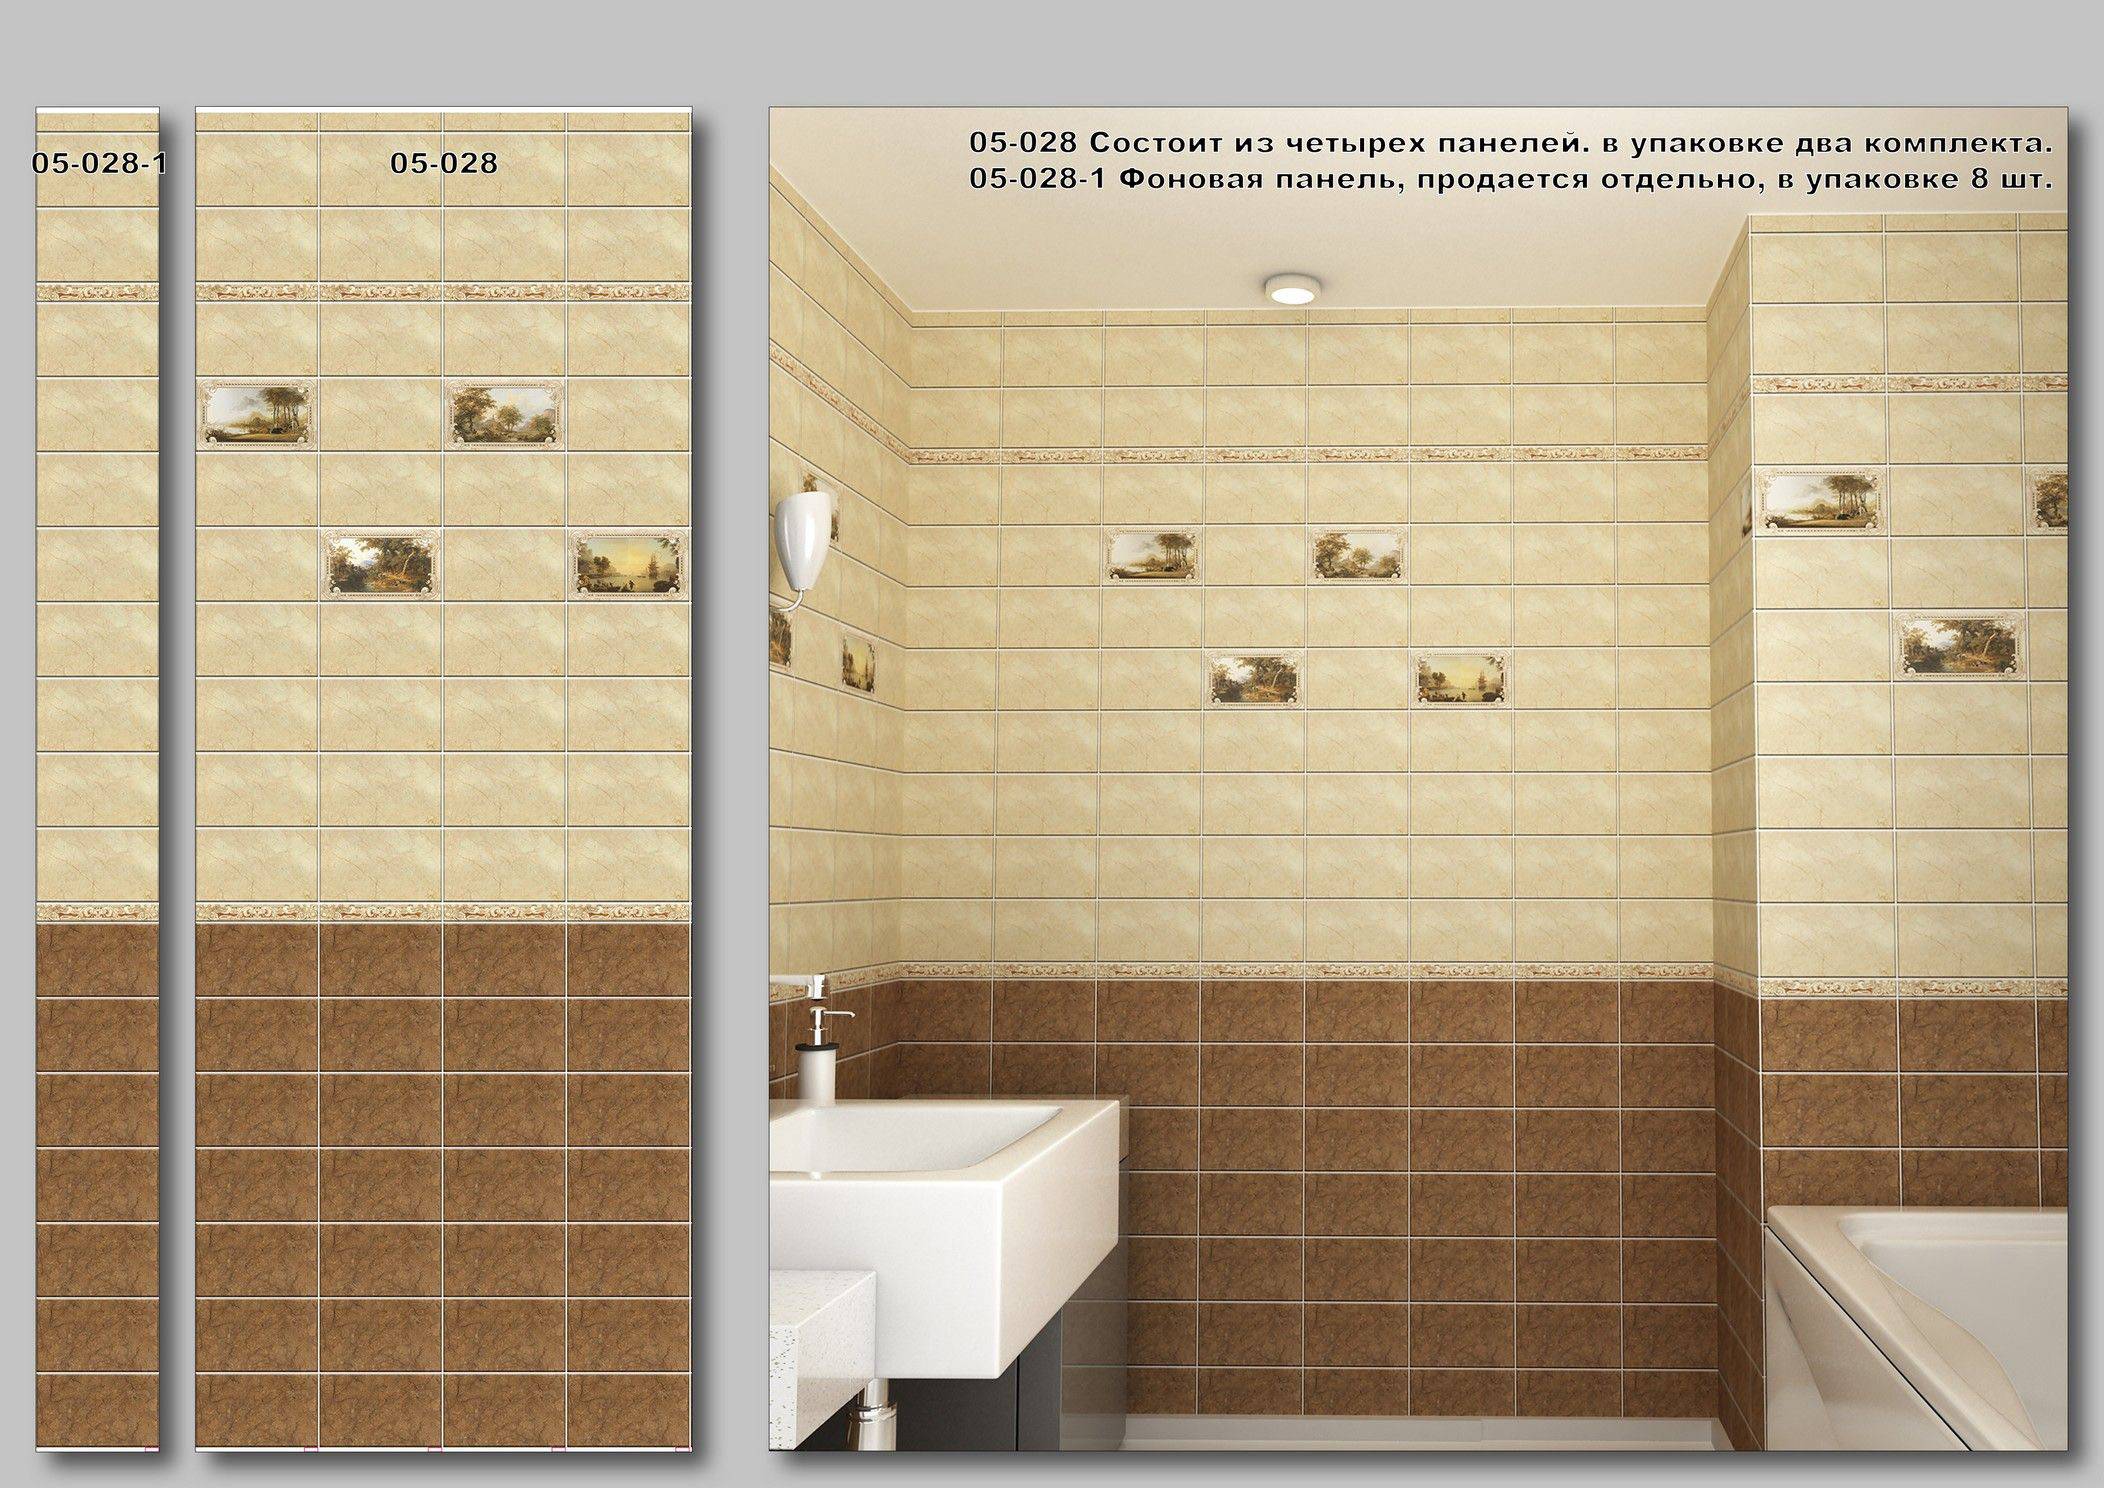 Отделка туалета плиткой: выбор и дизайн-идеи применения